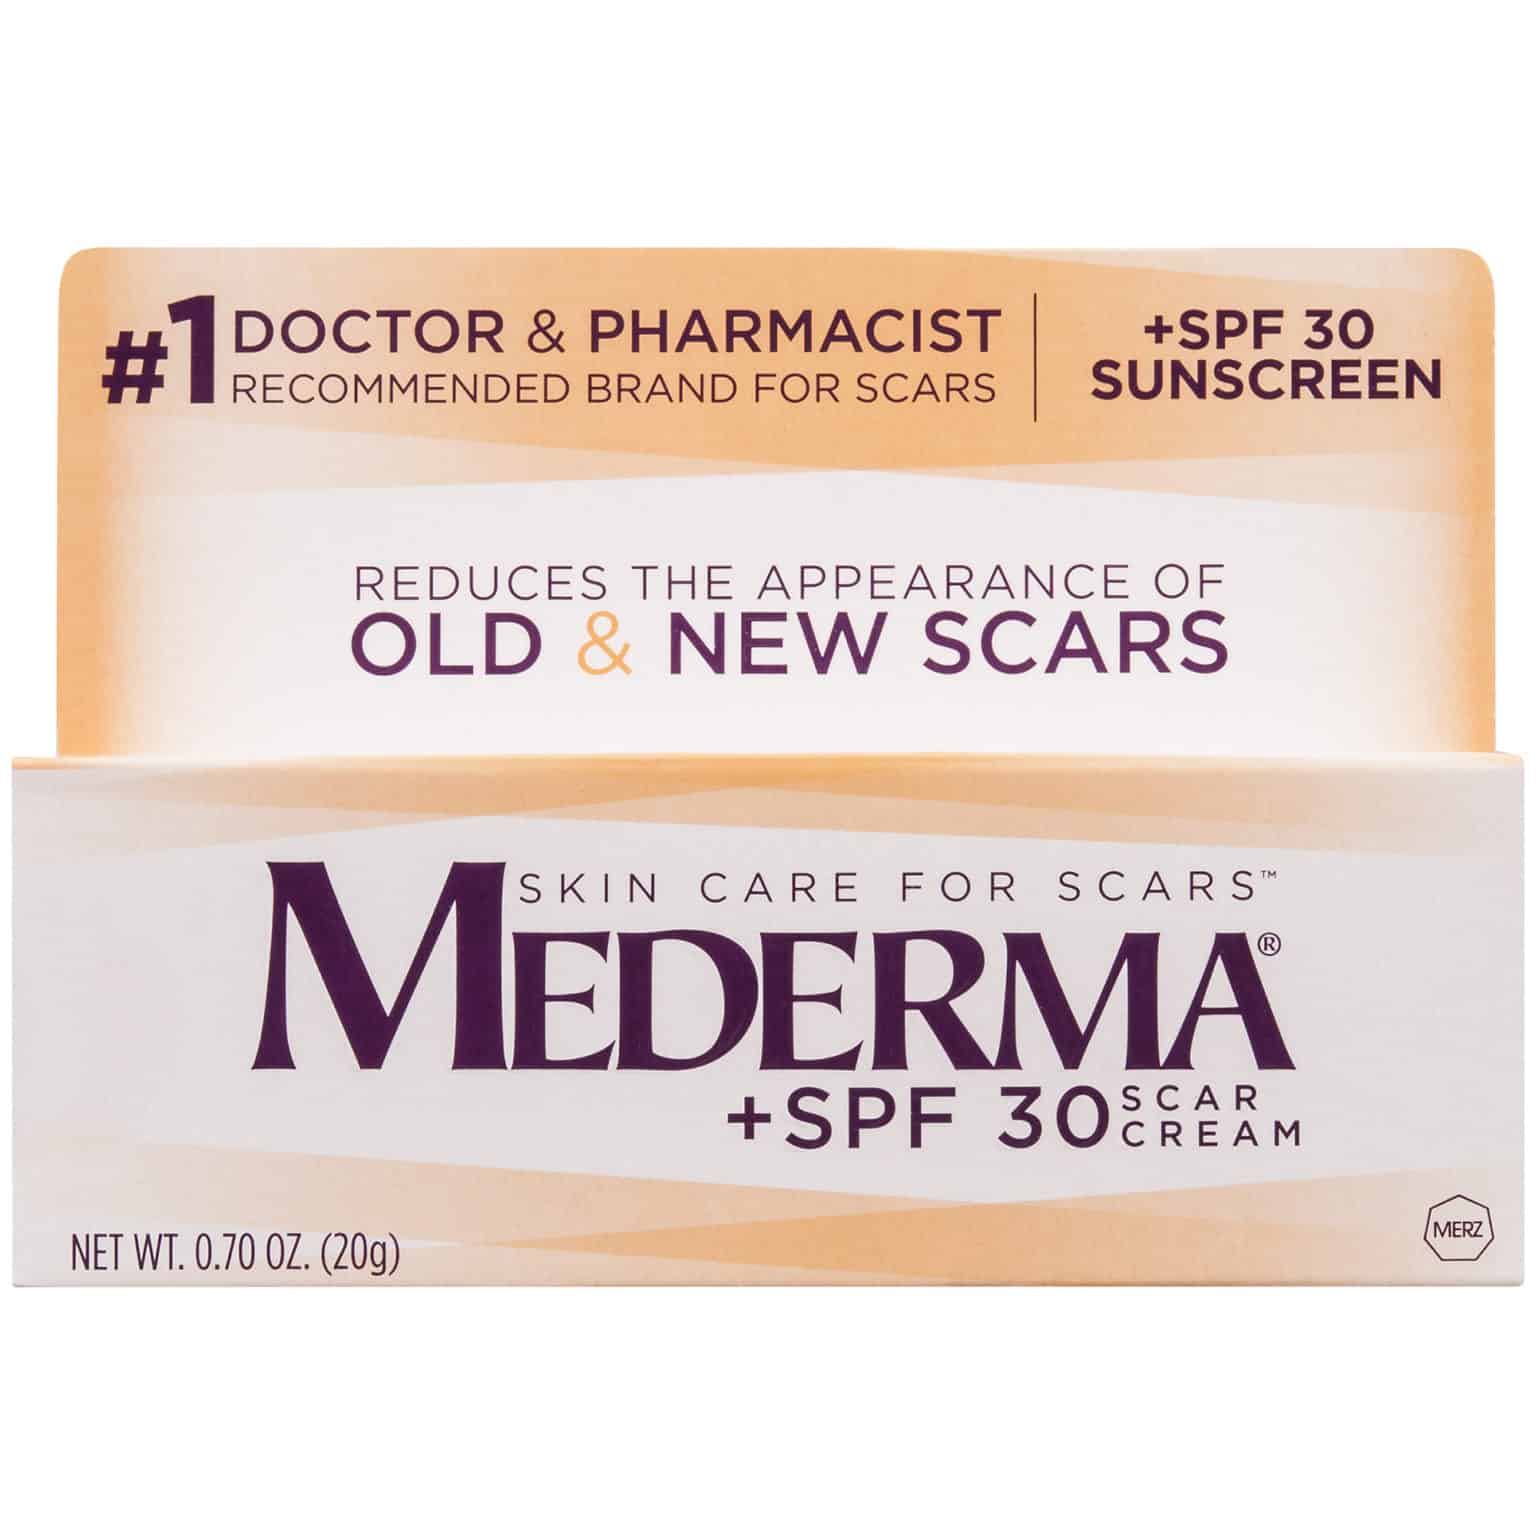 Save 3.00 off (1) Mederma +SPF 30 Scar Cream Printable Coupon